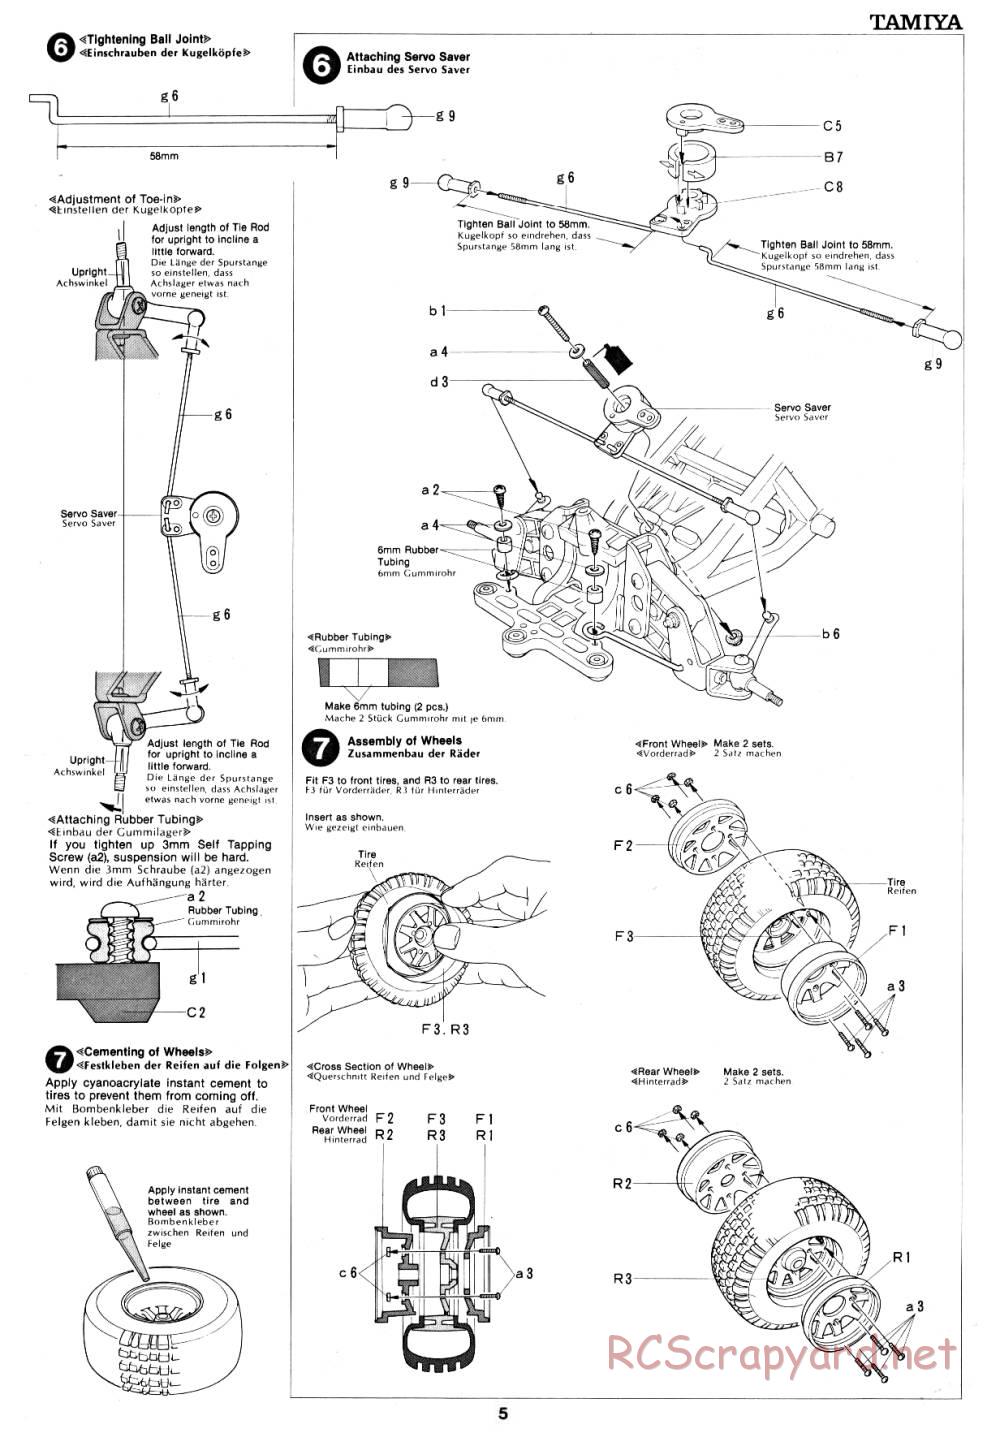 Tamiya - Subaru Brat - 58038 - Manual - Page 5